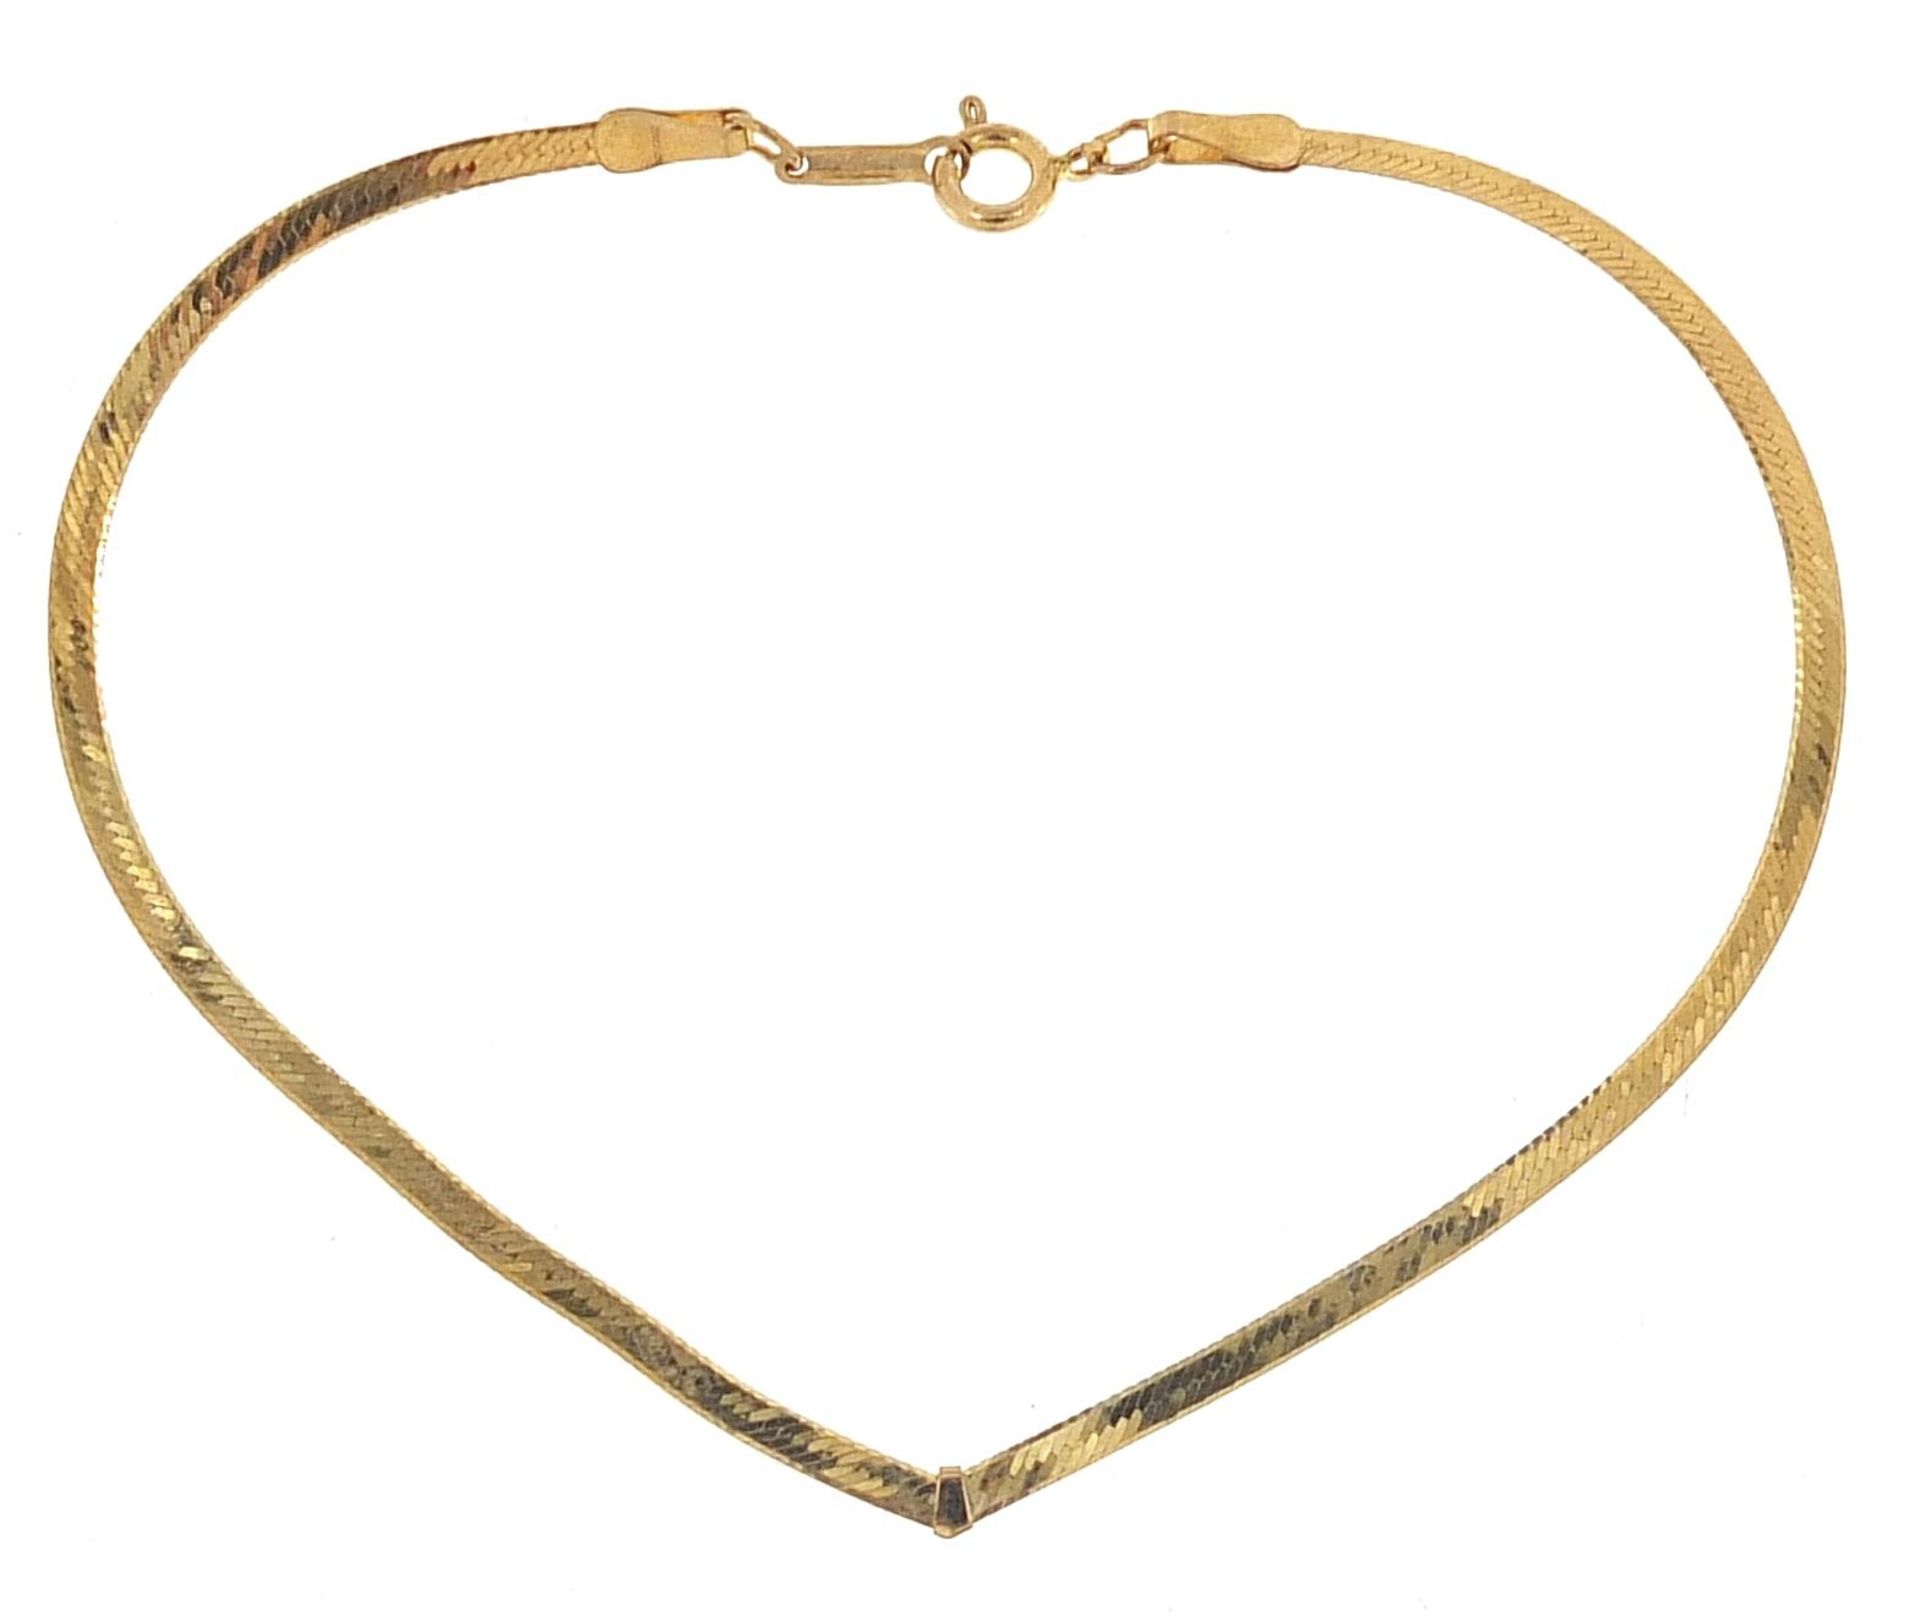 9ct gold herringbone link bracelet, 18cm in length, 0.9g - Image 2 of 5